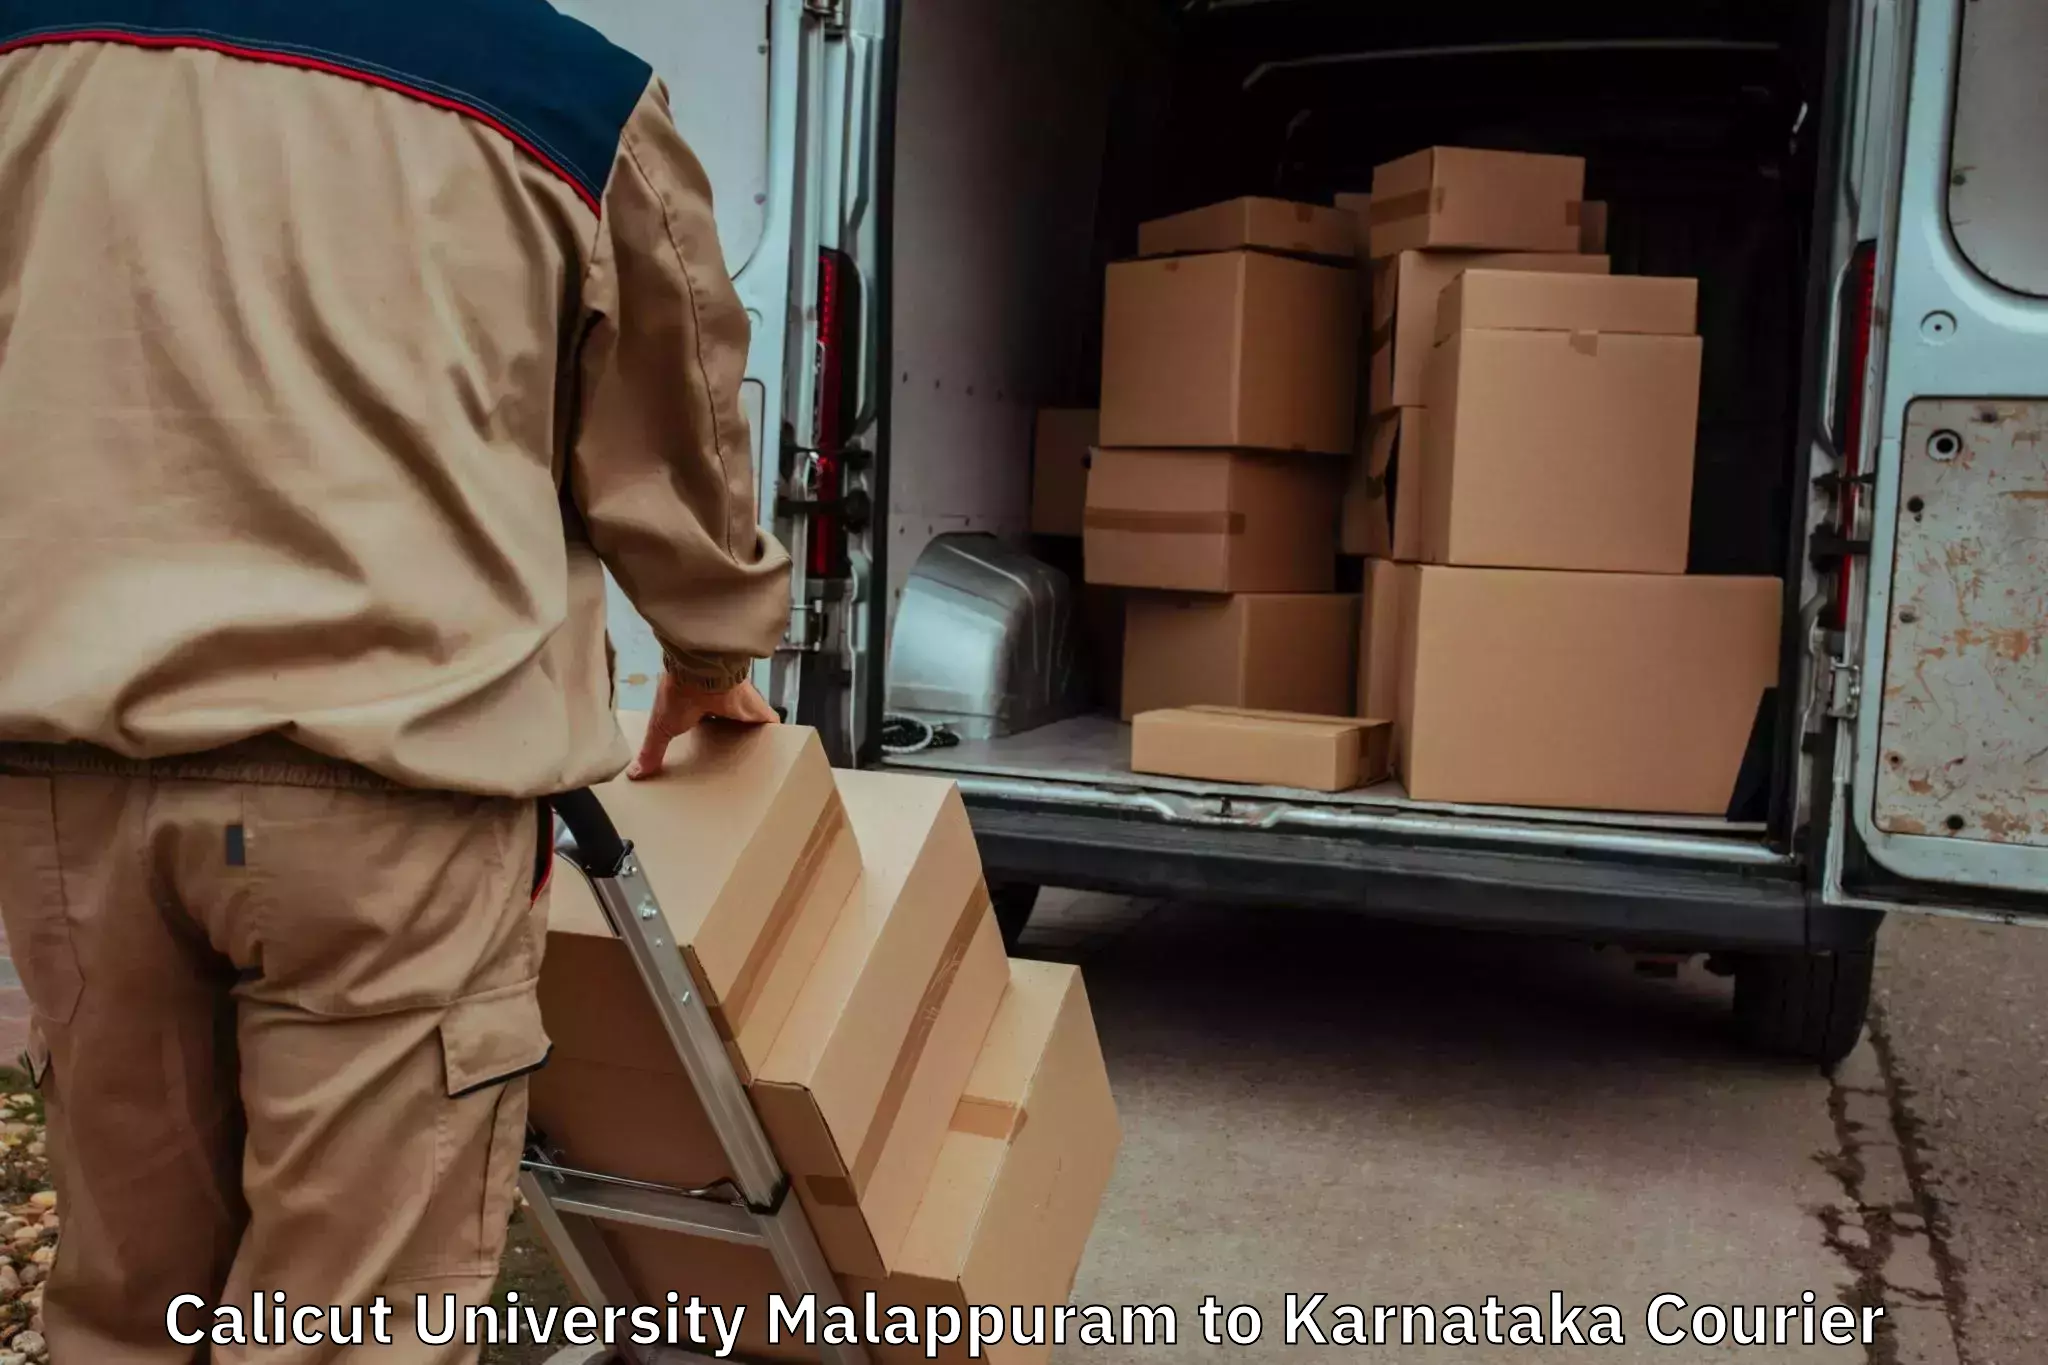 Household goods transport service Calicut University Malappuram to Ramanagara